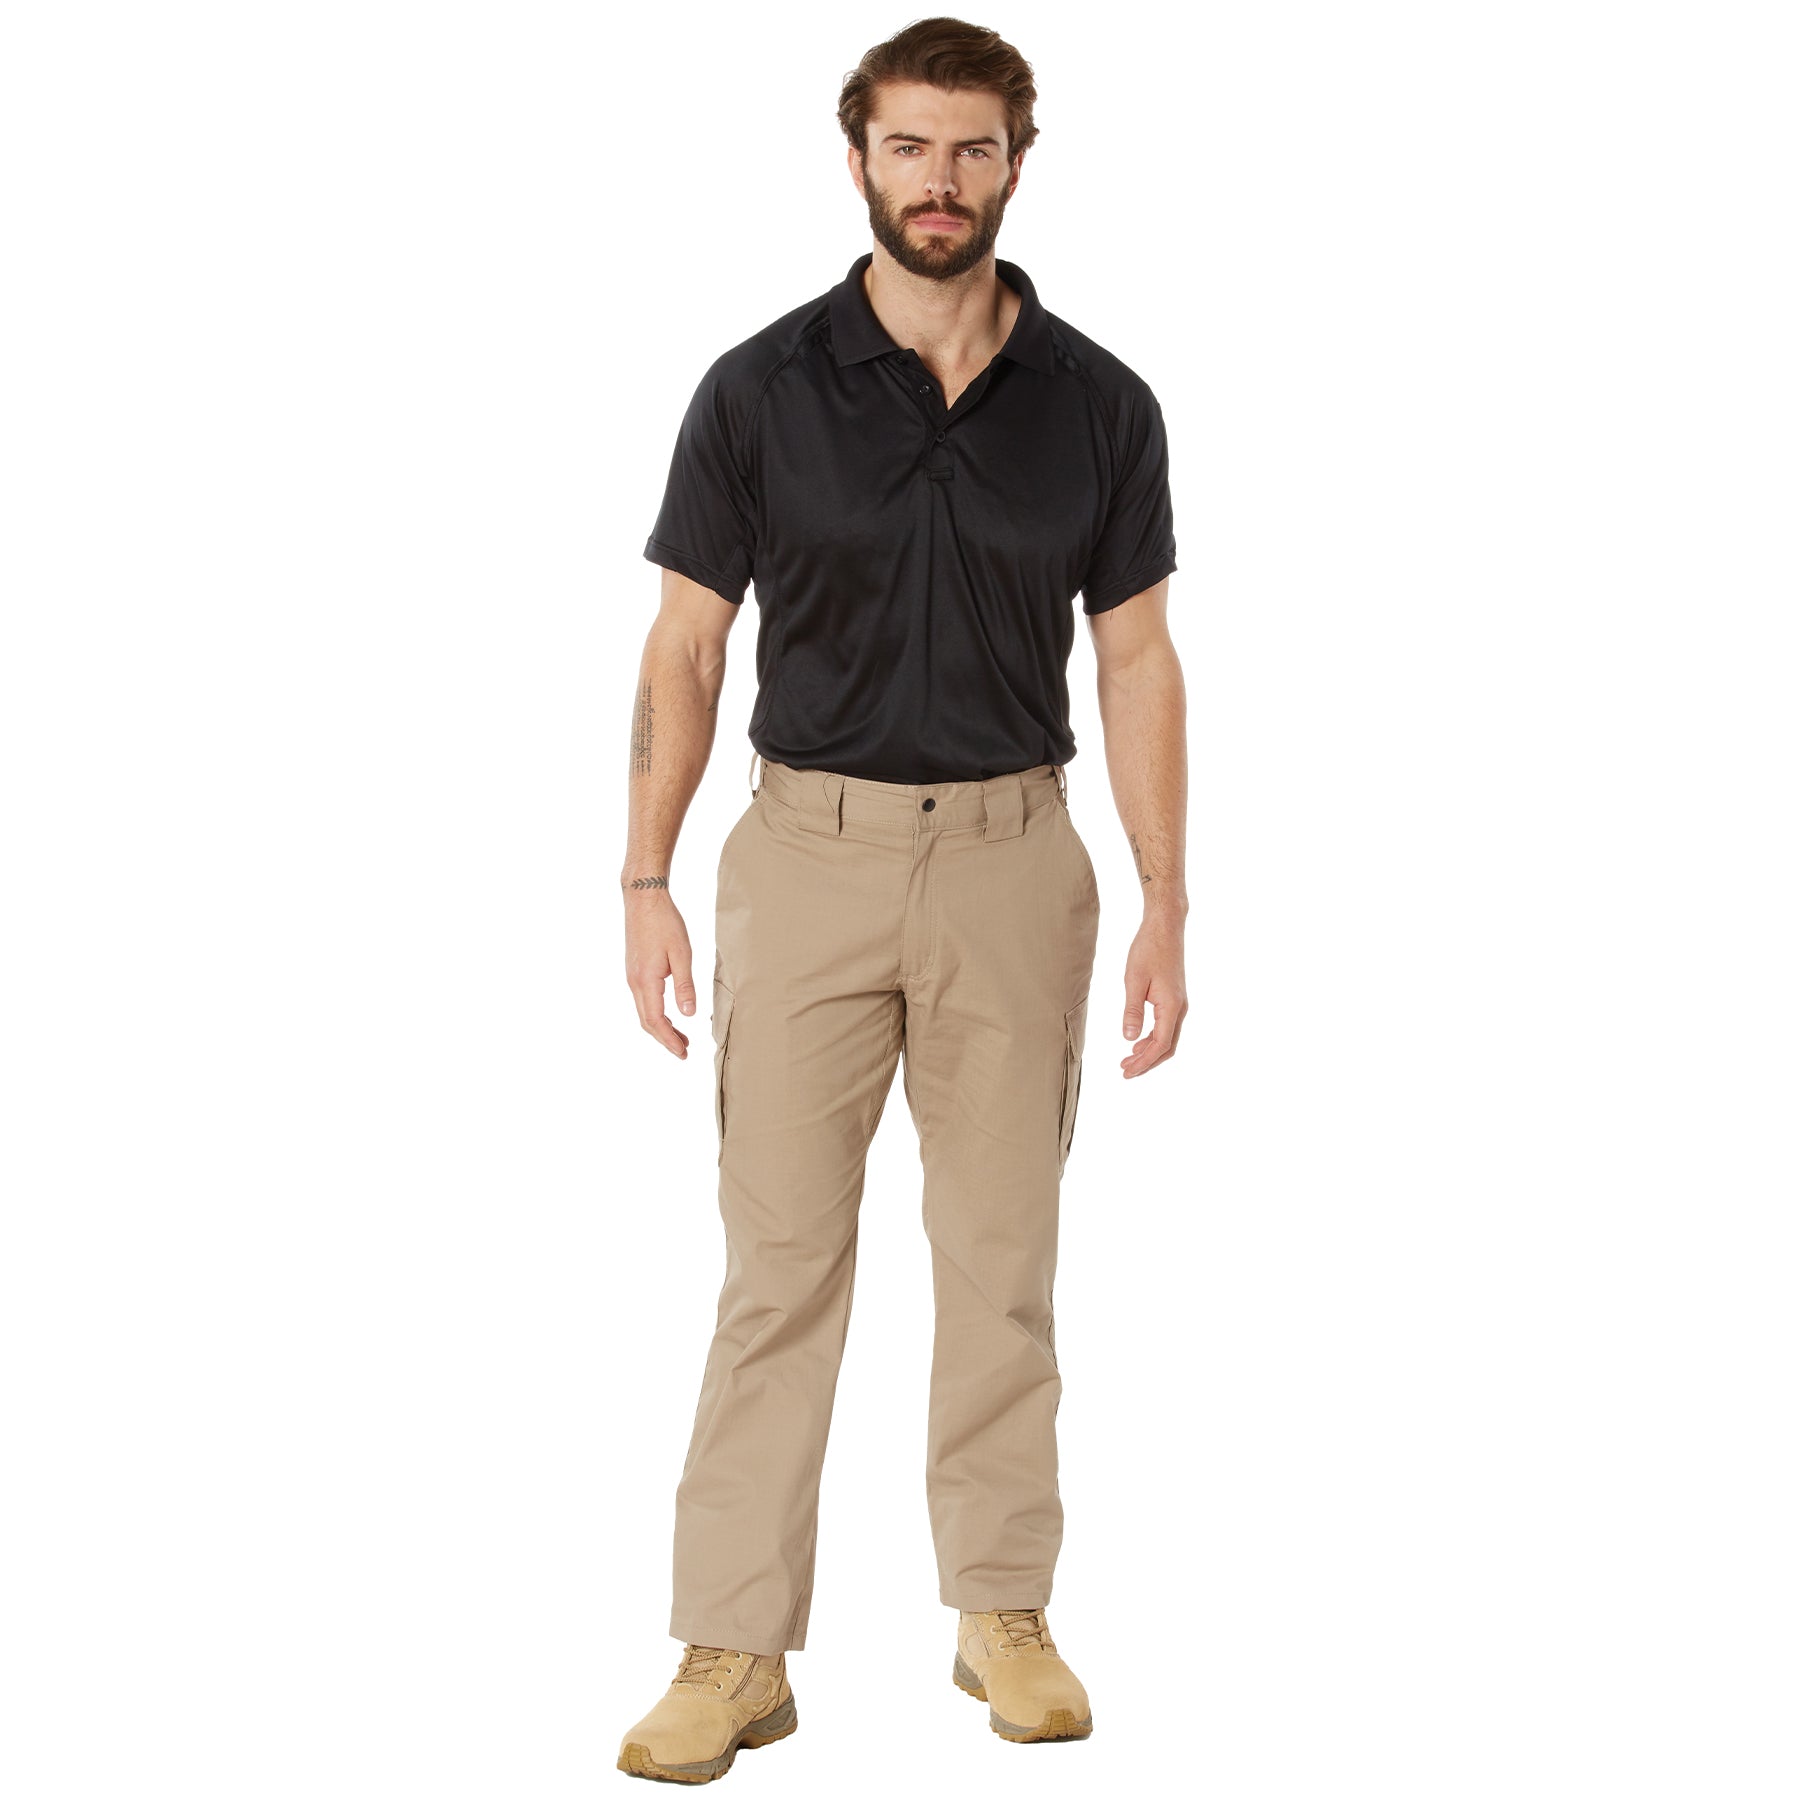 10-8 Lightweight Poly/Cotton/Spandex Rip-Stop Field Tactical Pants Khaki